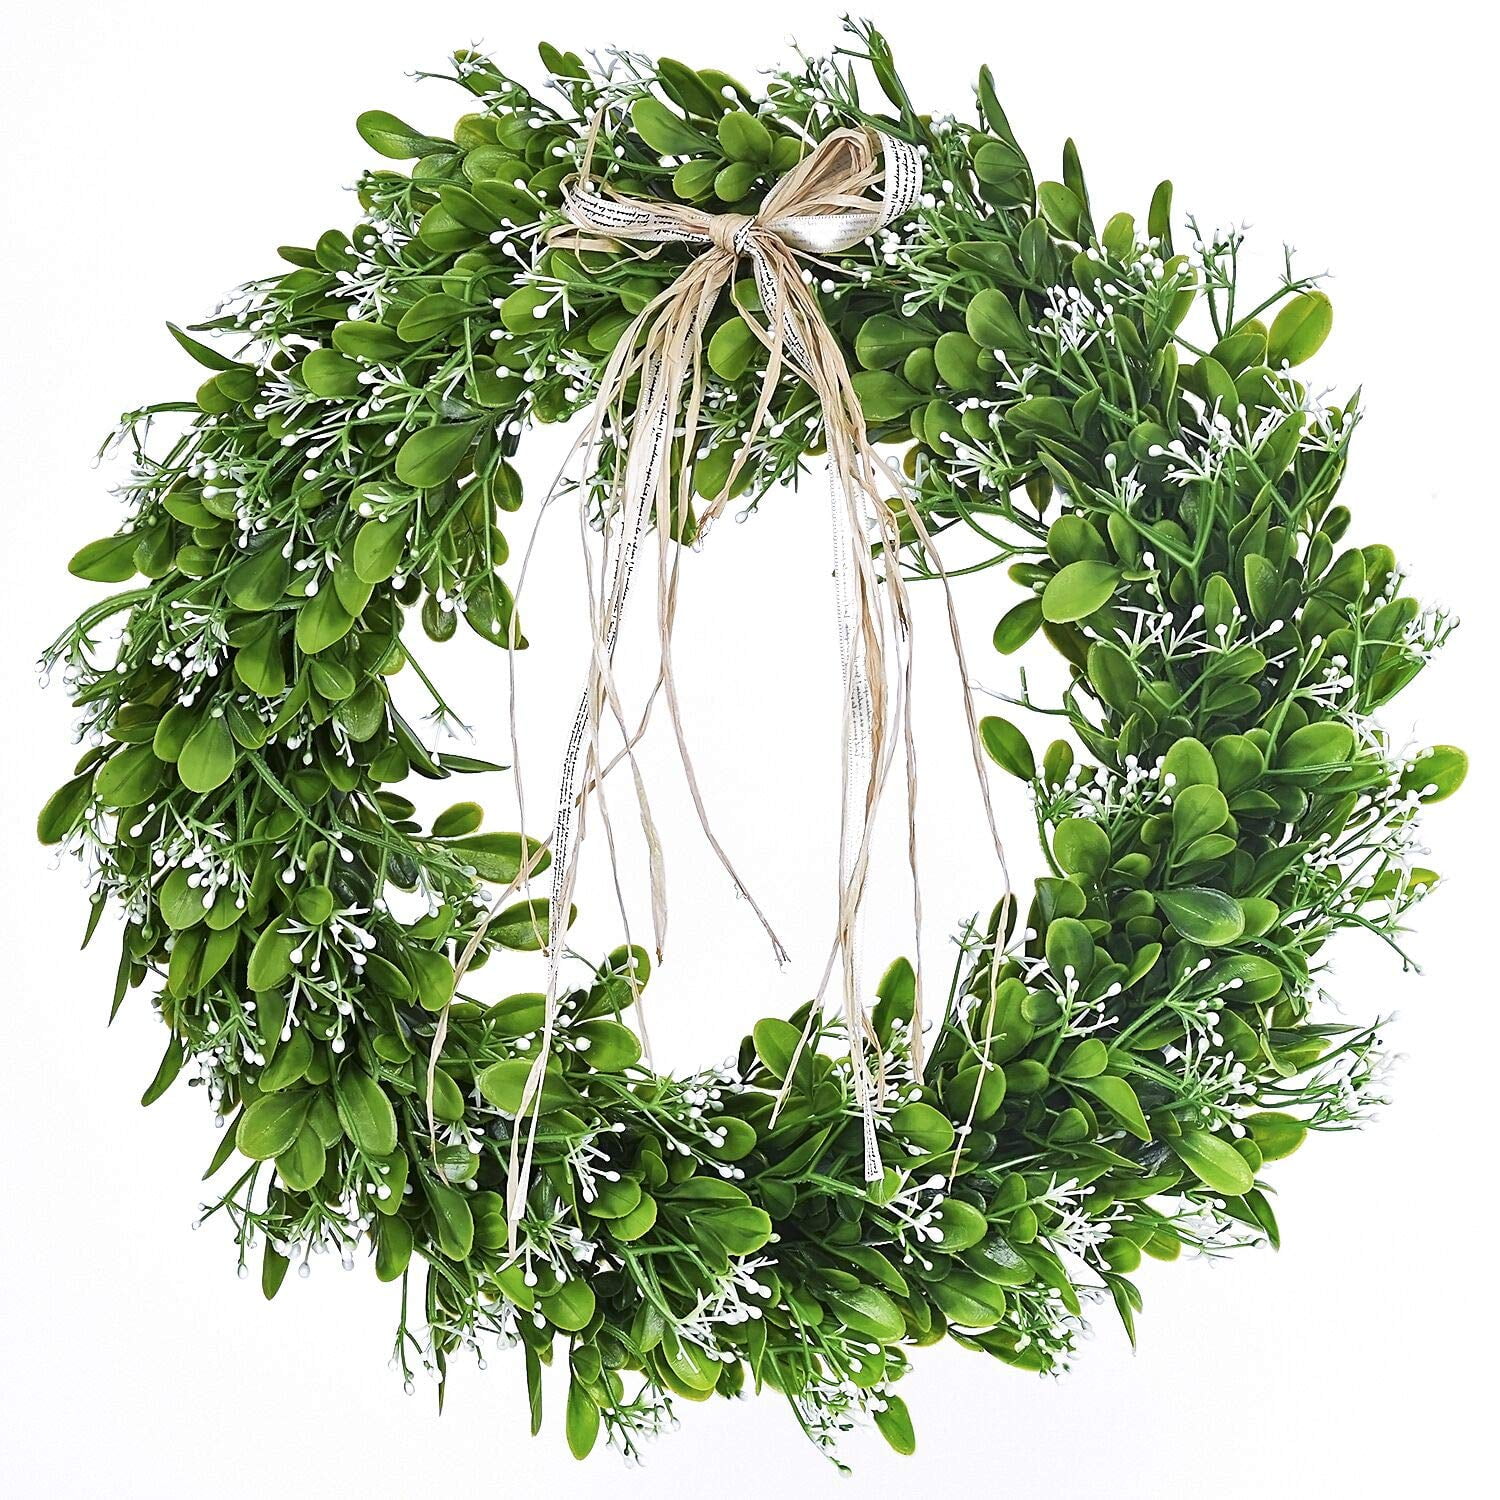 TOYANDONA Green Eucalyptus Wreath Artificial Green Leaves Wreaths Spring/Summer Greenery Wreath for Front Door Wall Window Decor